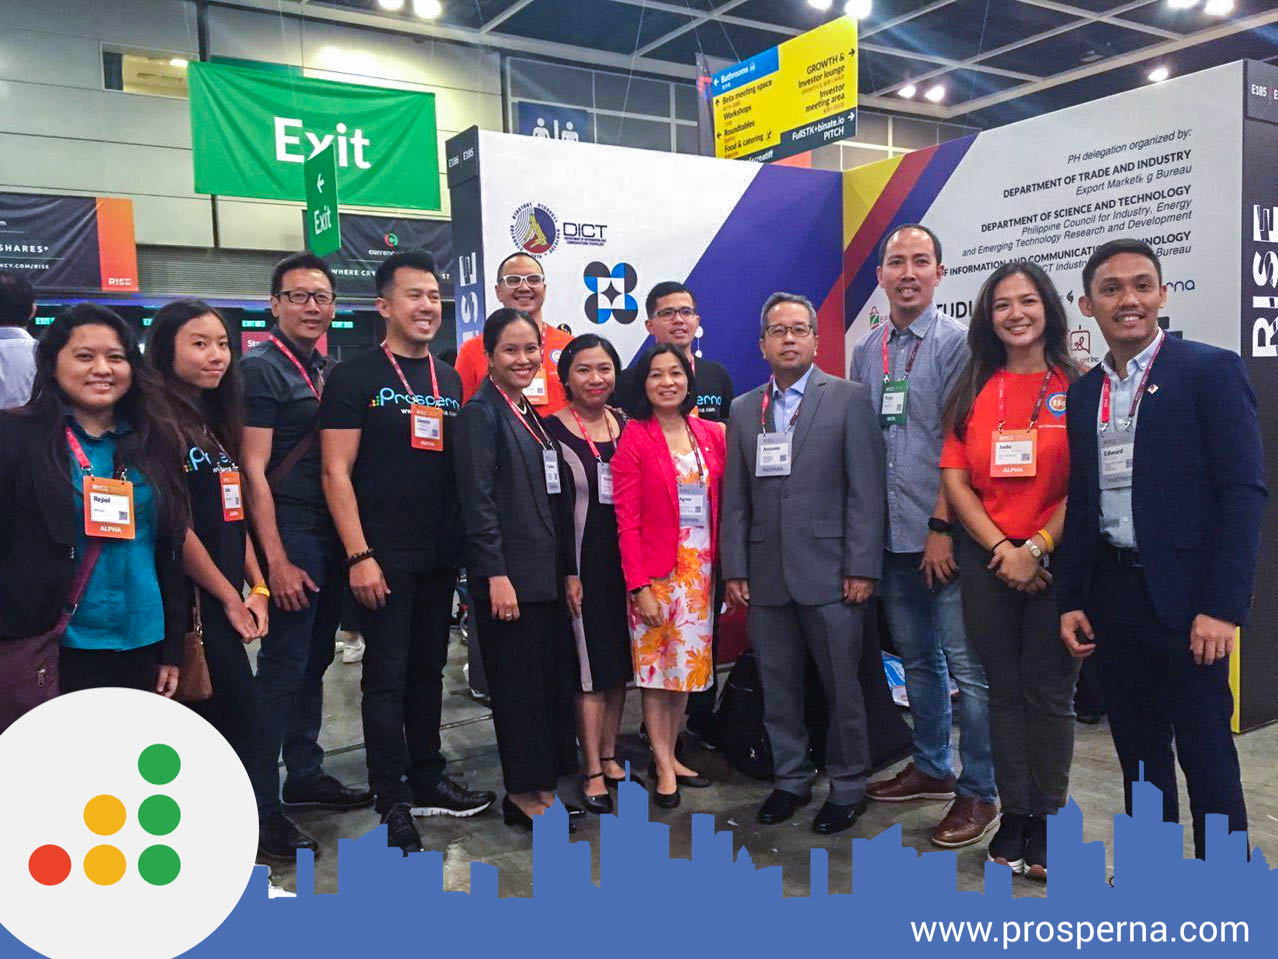 Prosperna Marketing Site | Press Release: Prosperna joined the RISE Conference 2019 in Hong Kong